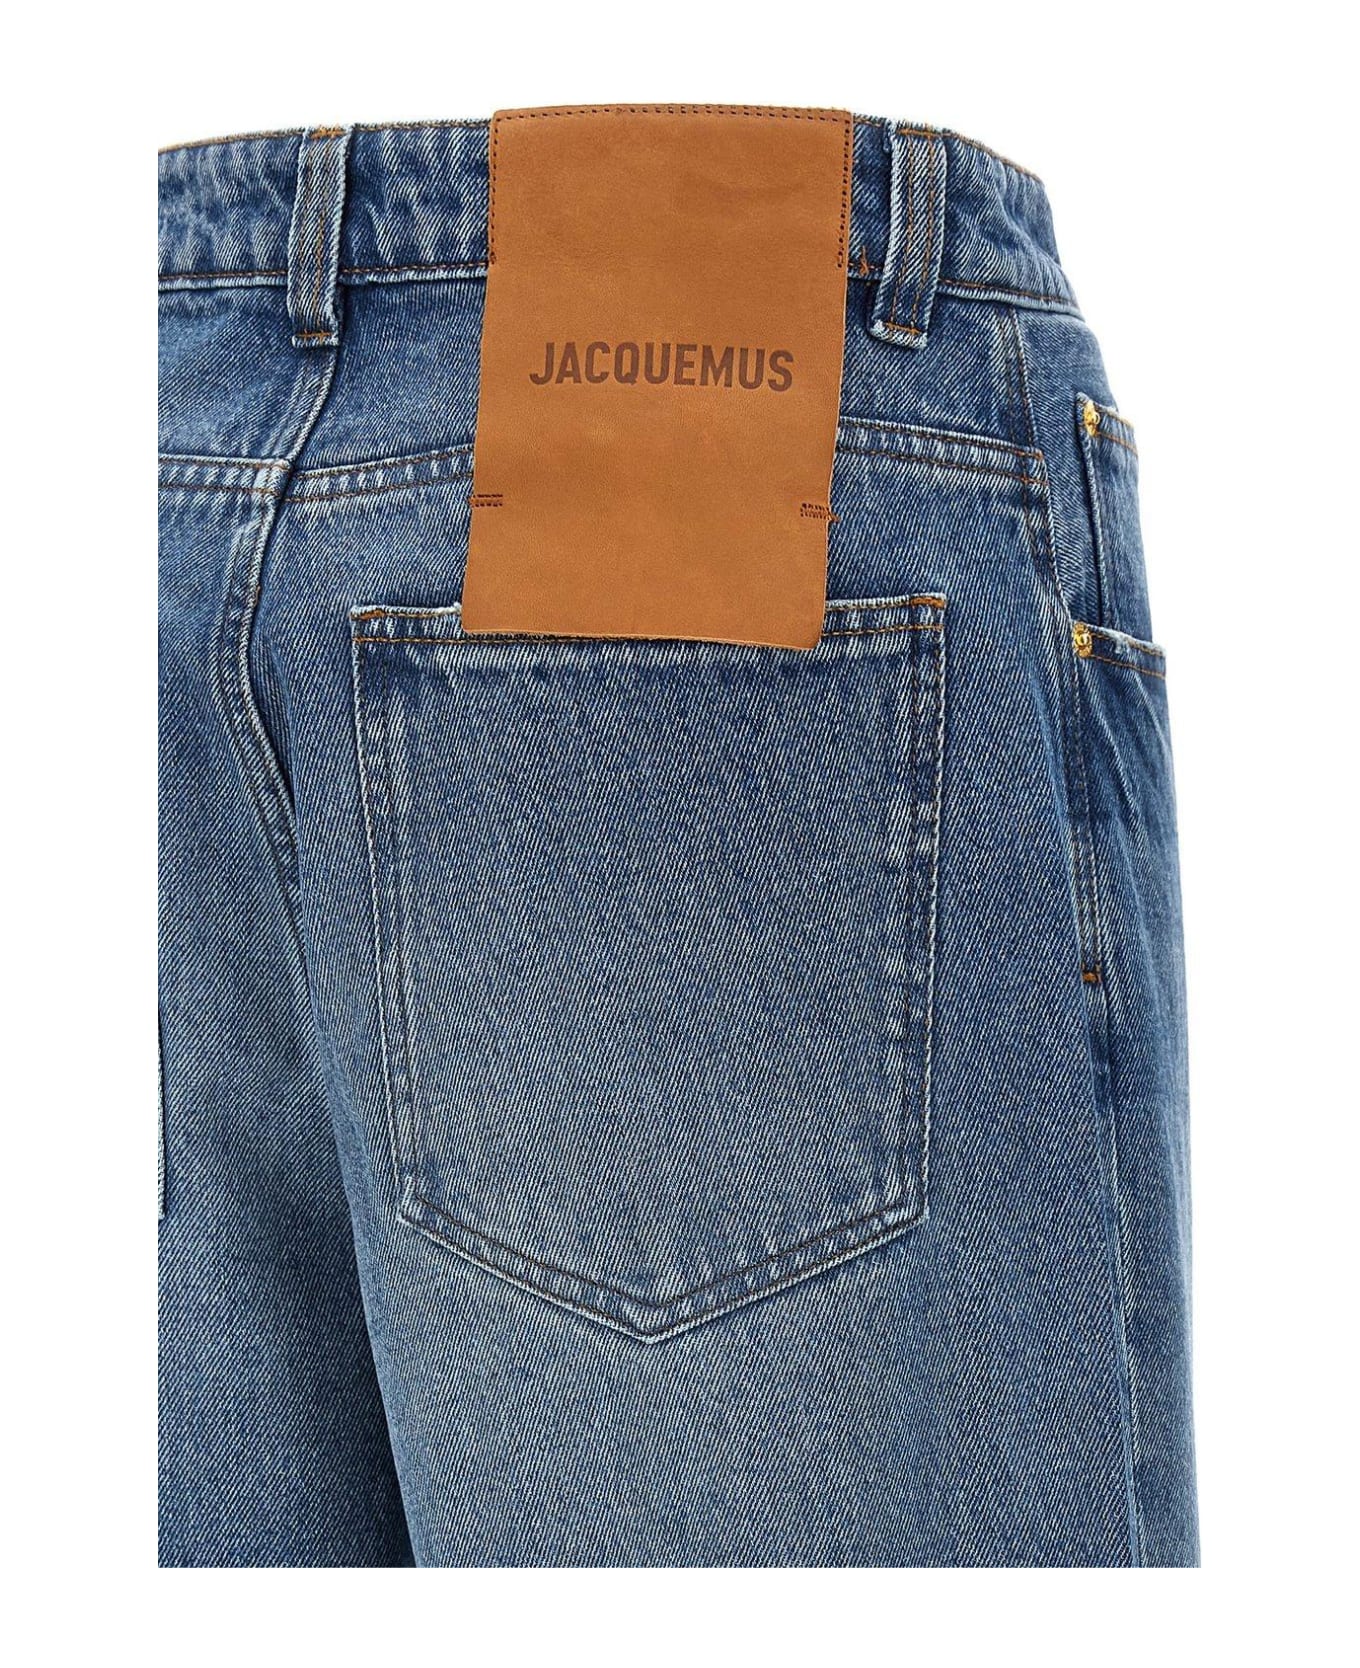 Jacquemus Nîmes Wide-leg Jeans - 33C BLUE/TABAC デニム